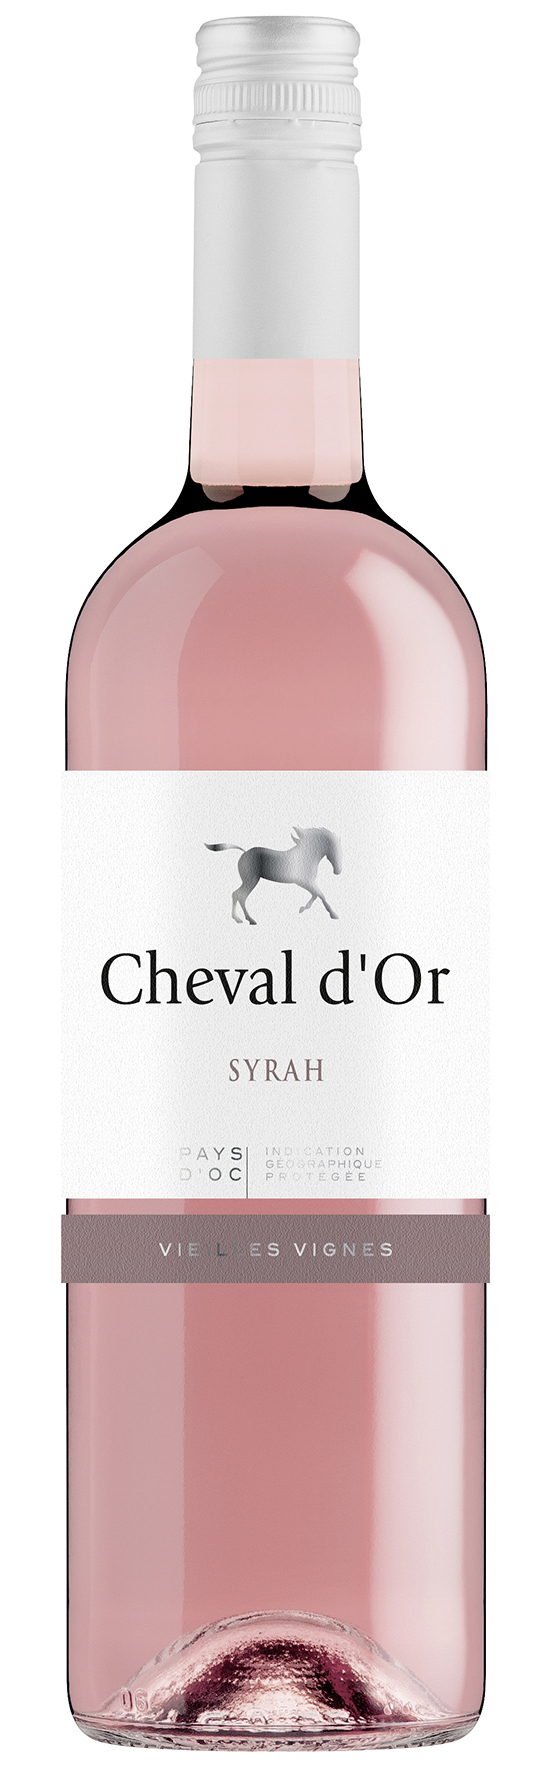 Le Cheval d'Oc Syrah Rose jetzt günstig bestellen. | Bonbou Gaumenfreuden